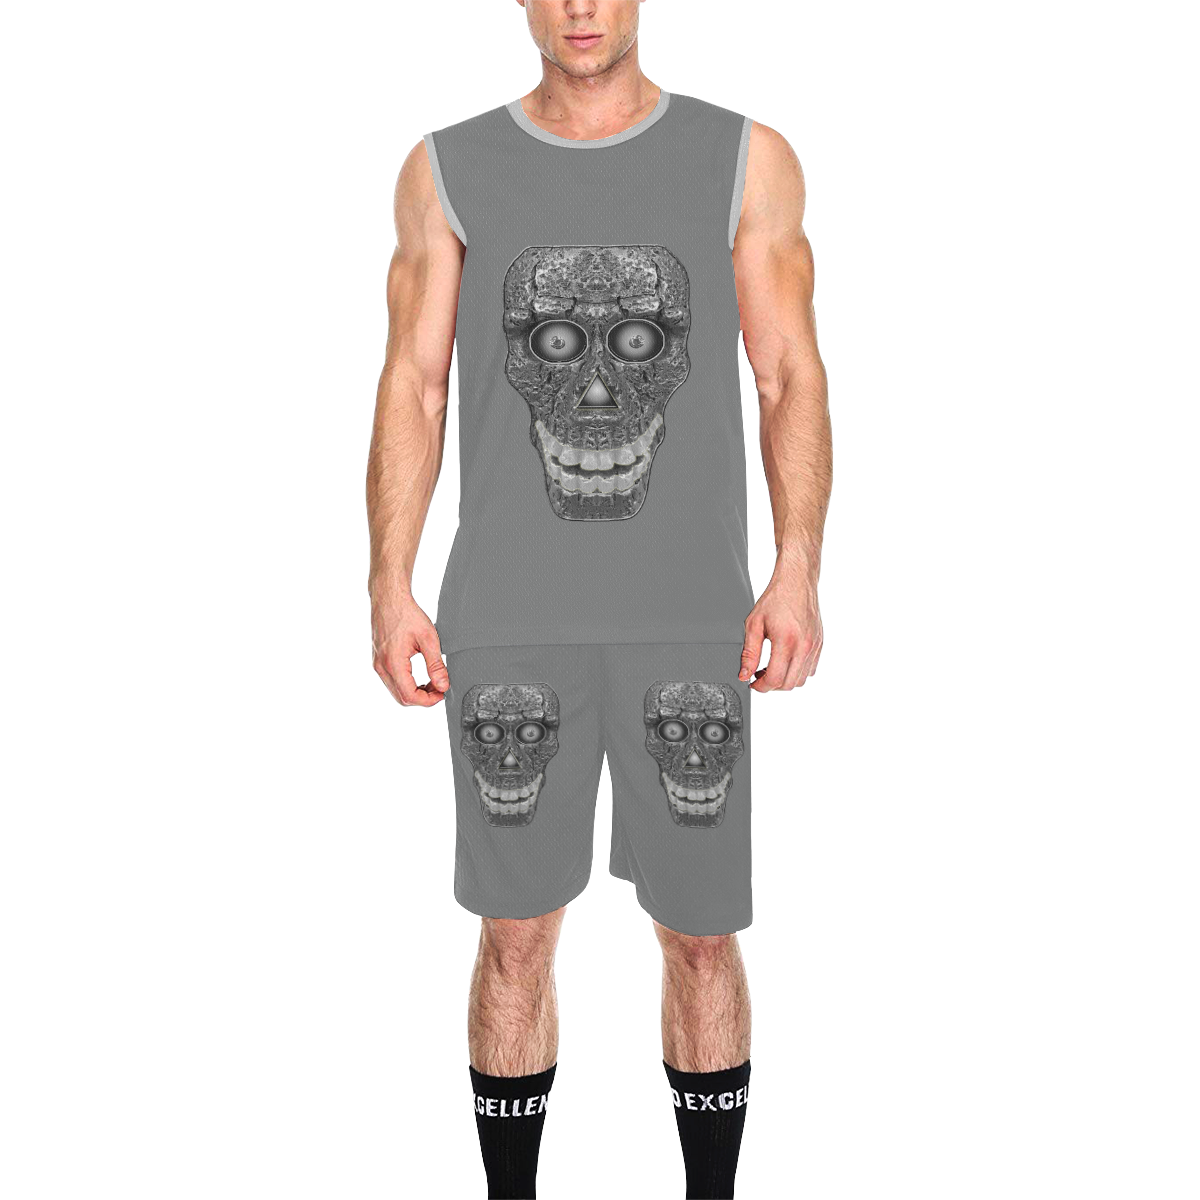 Cod Grey Skull Head All Over Print Basketball Uniform